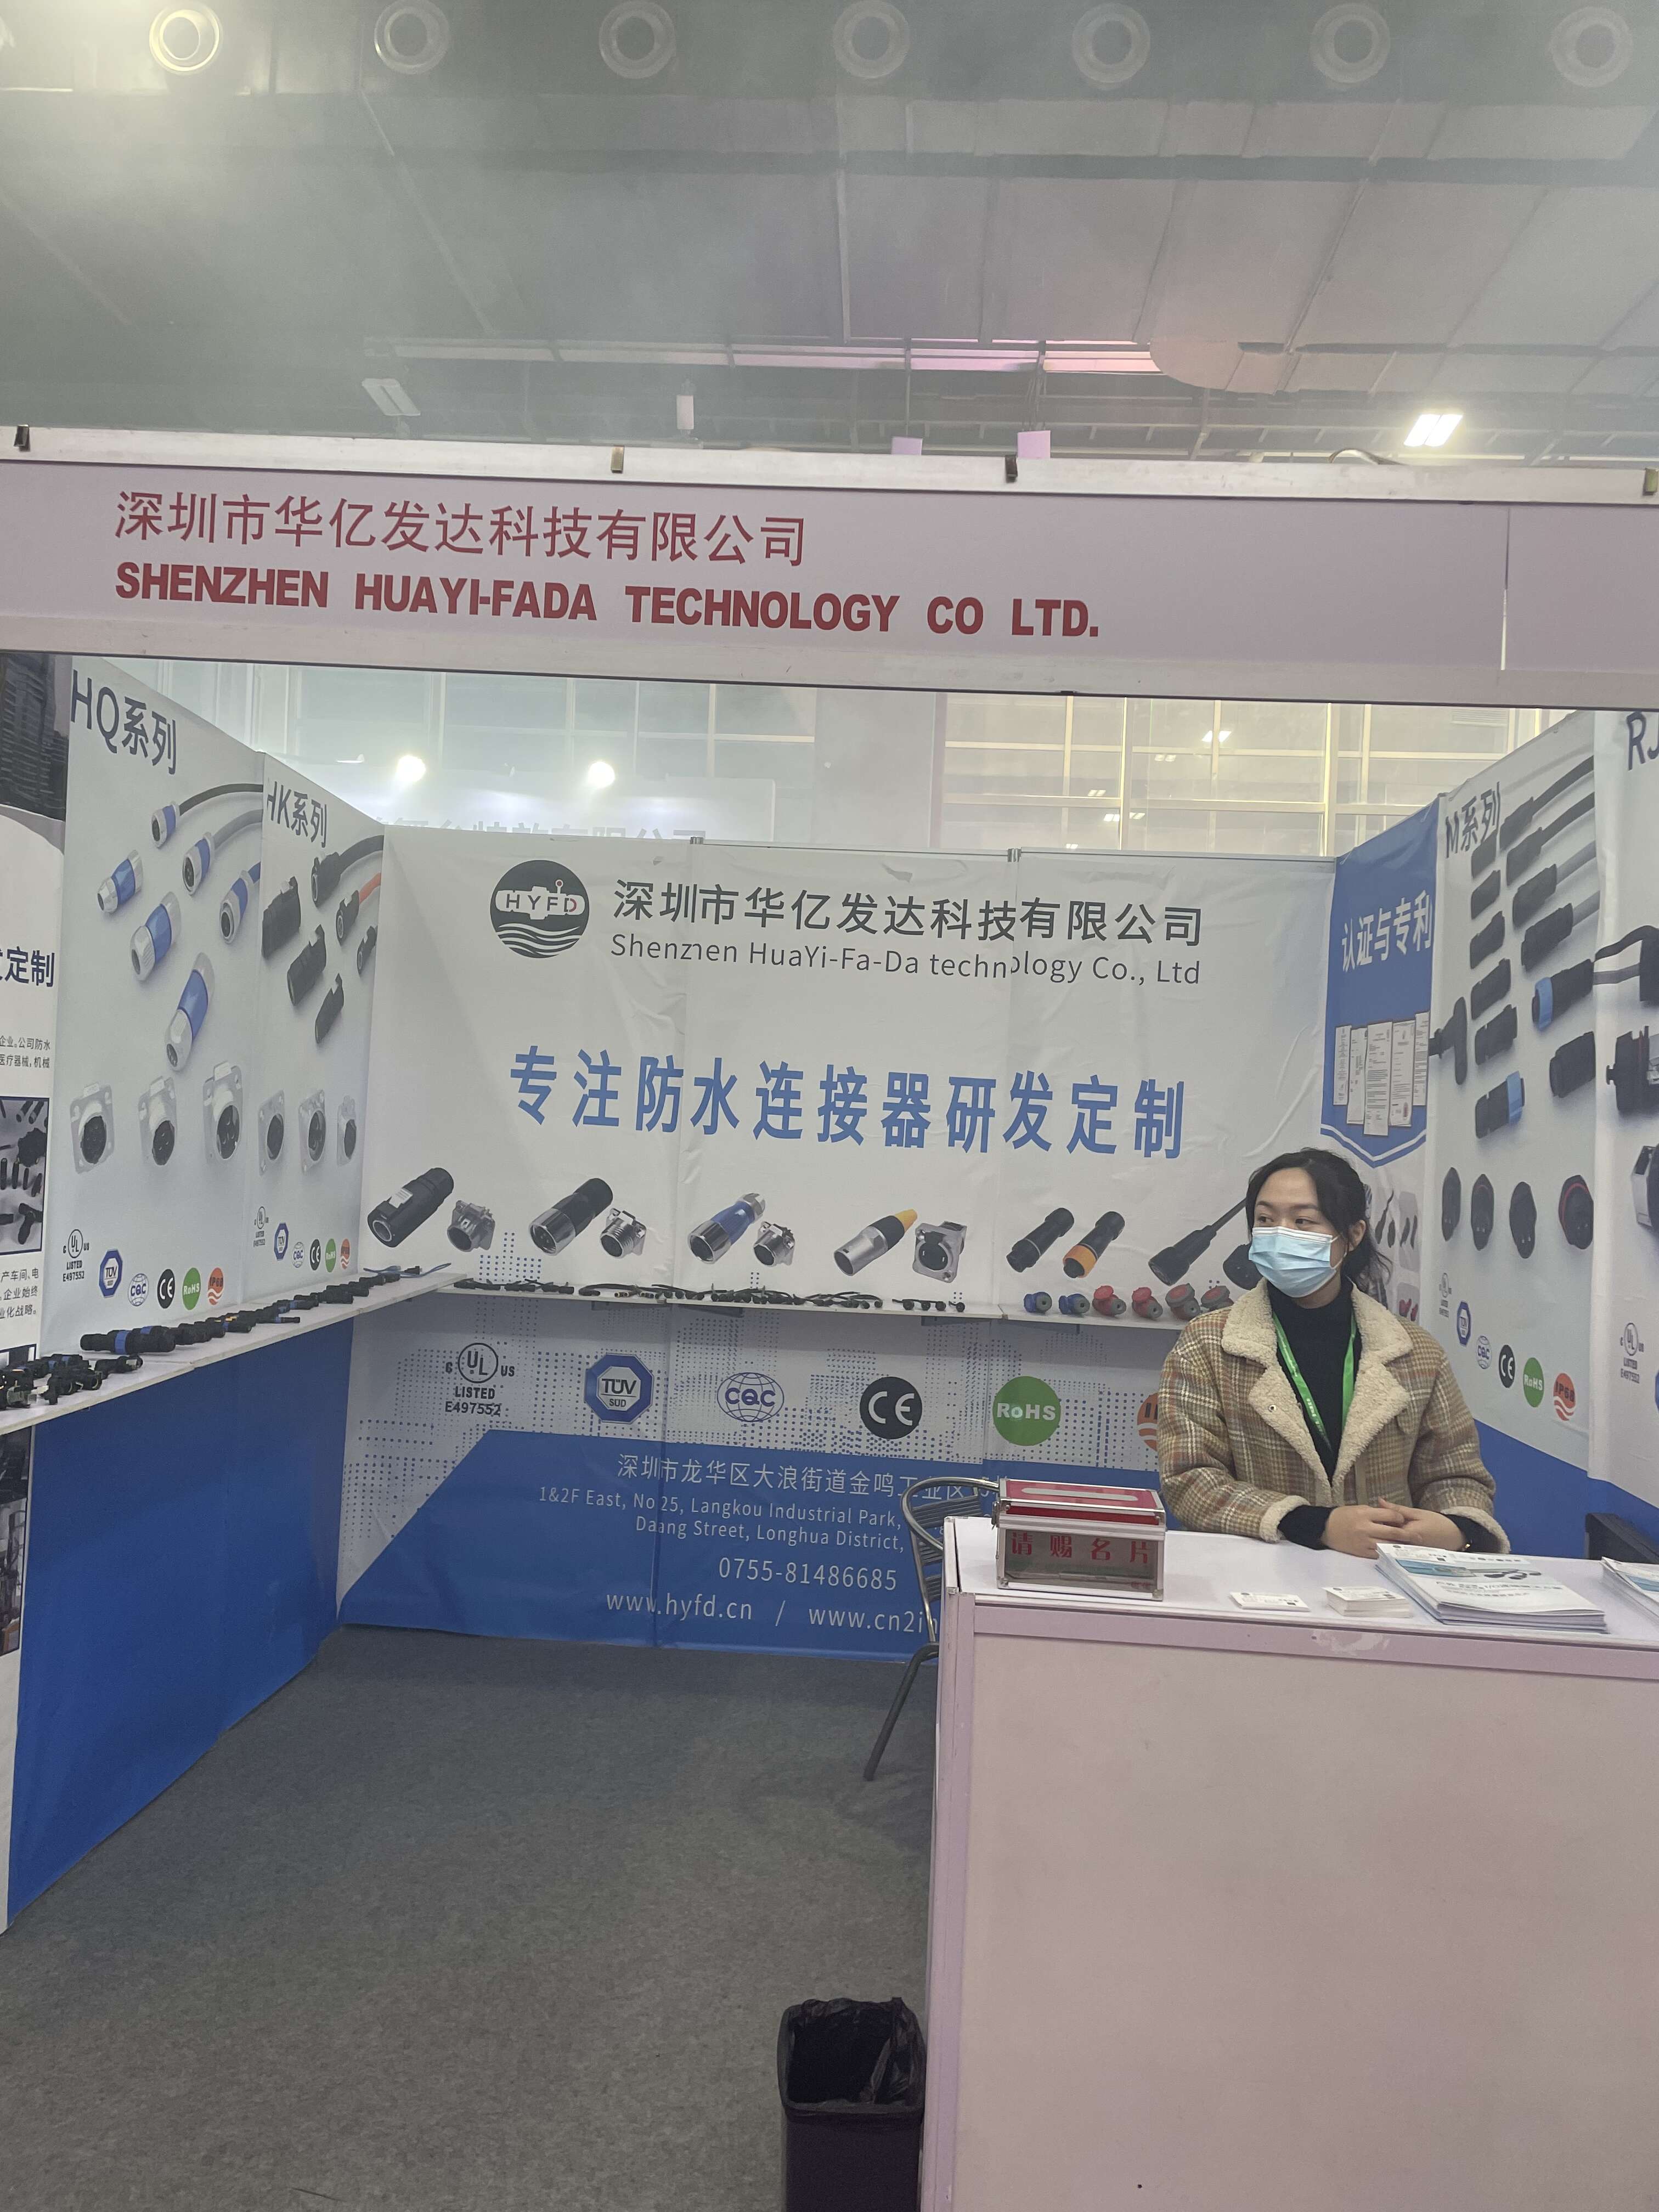 ShenZhen HuaYi-FaDa Technology CO., Ltd. deltog i lysmessen